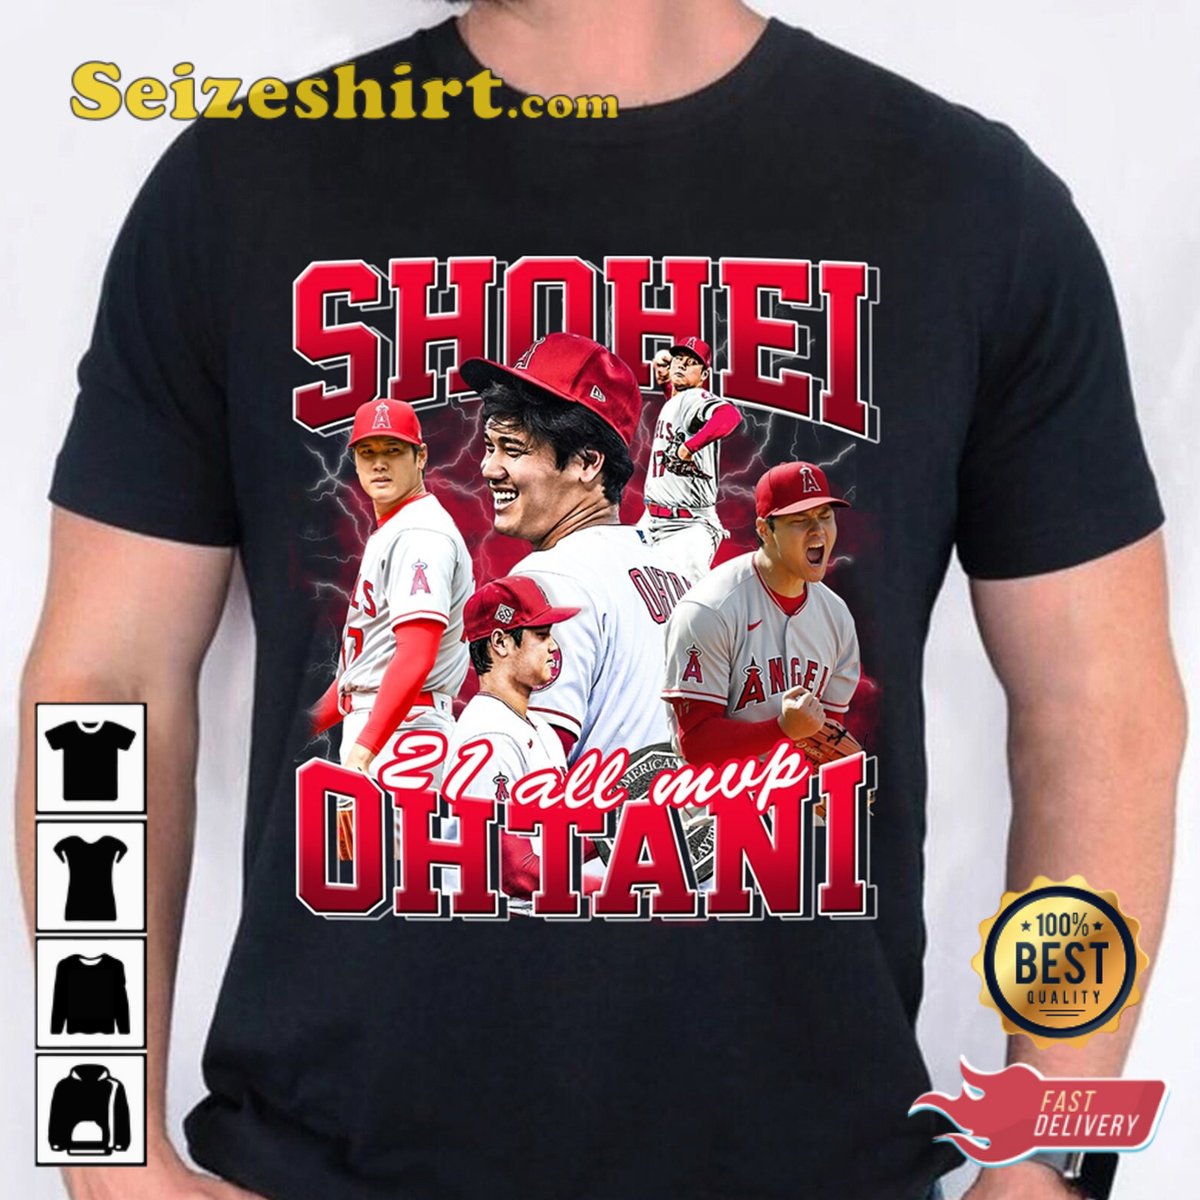 Los Angeles Dodgers Shohei Ohtani Baseball MLB Shotime T-shirt 
seizeshirt.com/la-shohei-ohta… 
#ShoheiOhtani #LosAngelesDodgers #Dodgers #LADodgers #DodgersWin #LetsGoDodgers #MLB #Baseball #Trending #Seizeshirt